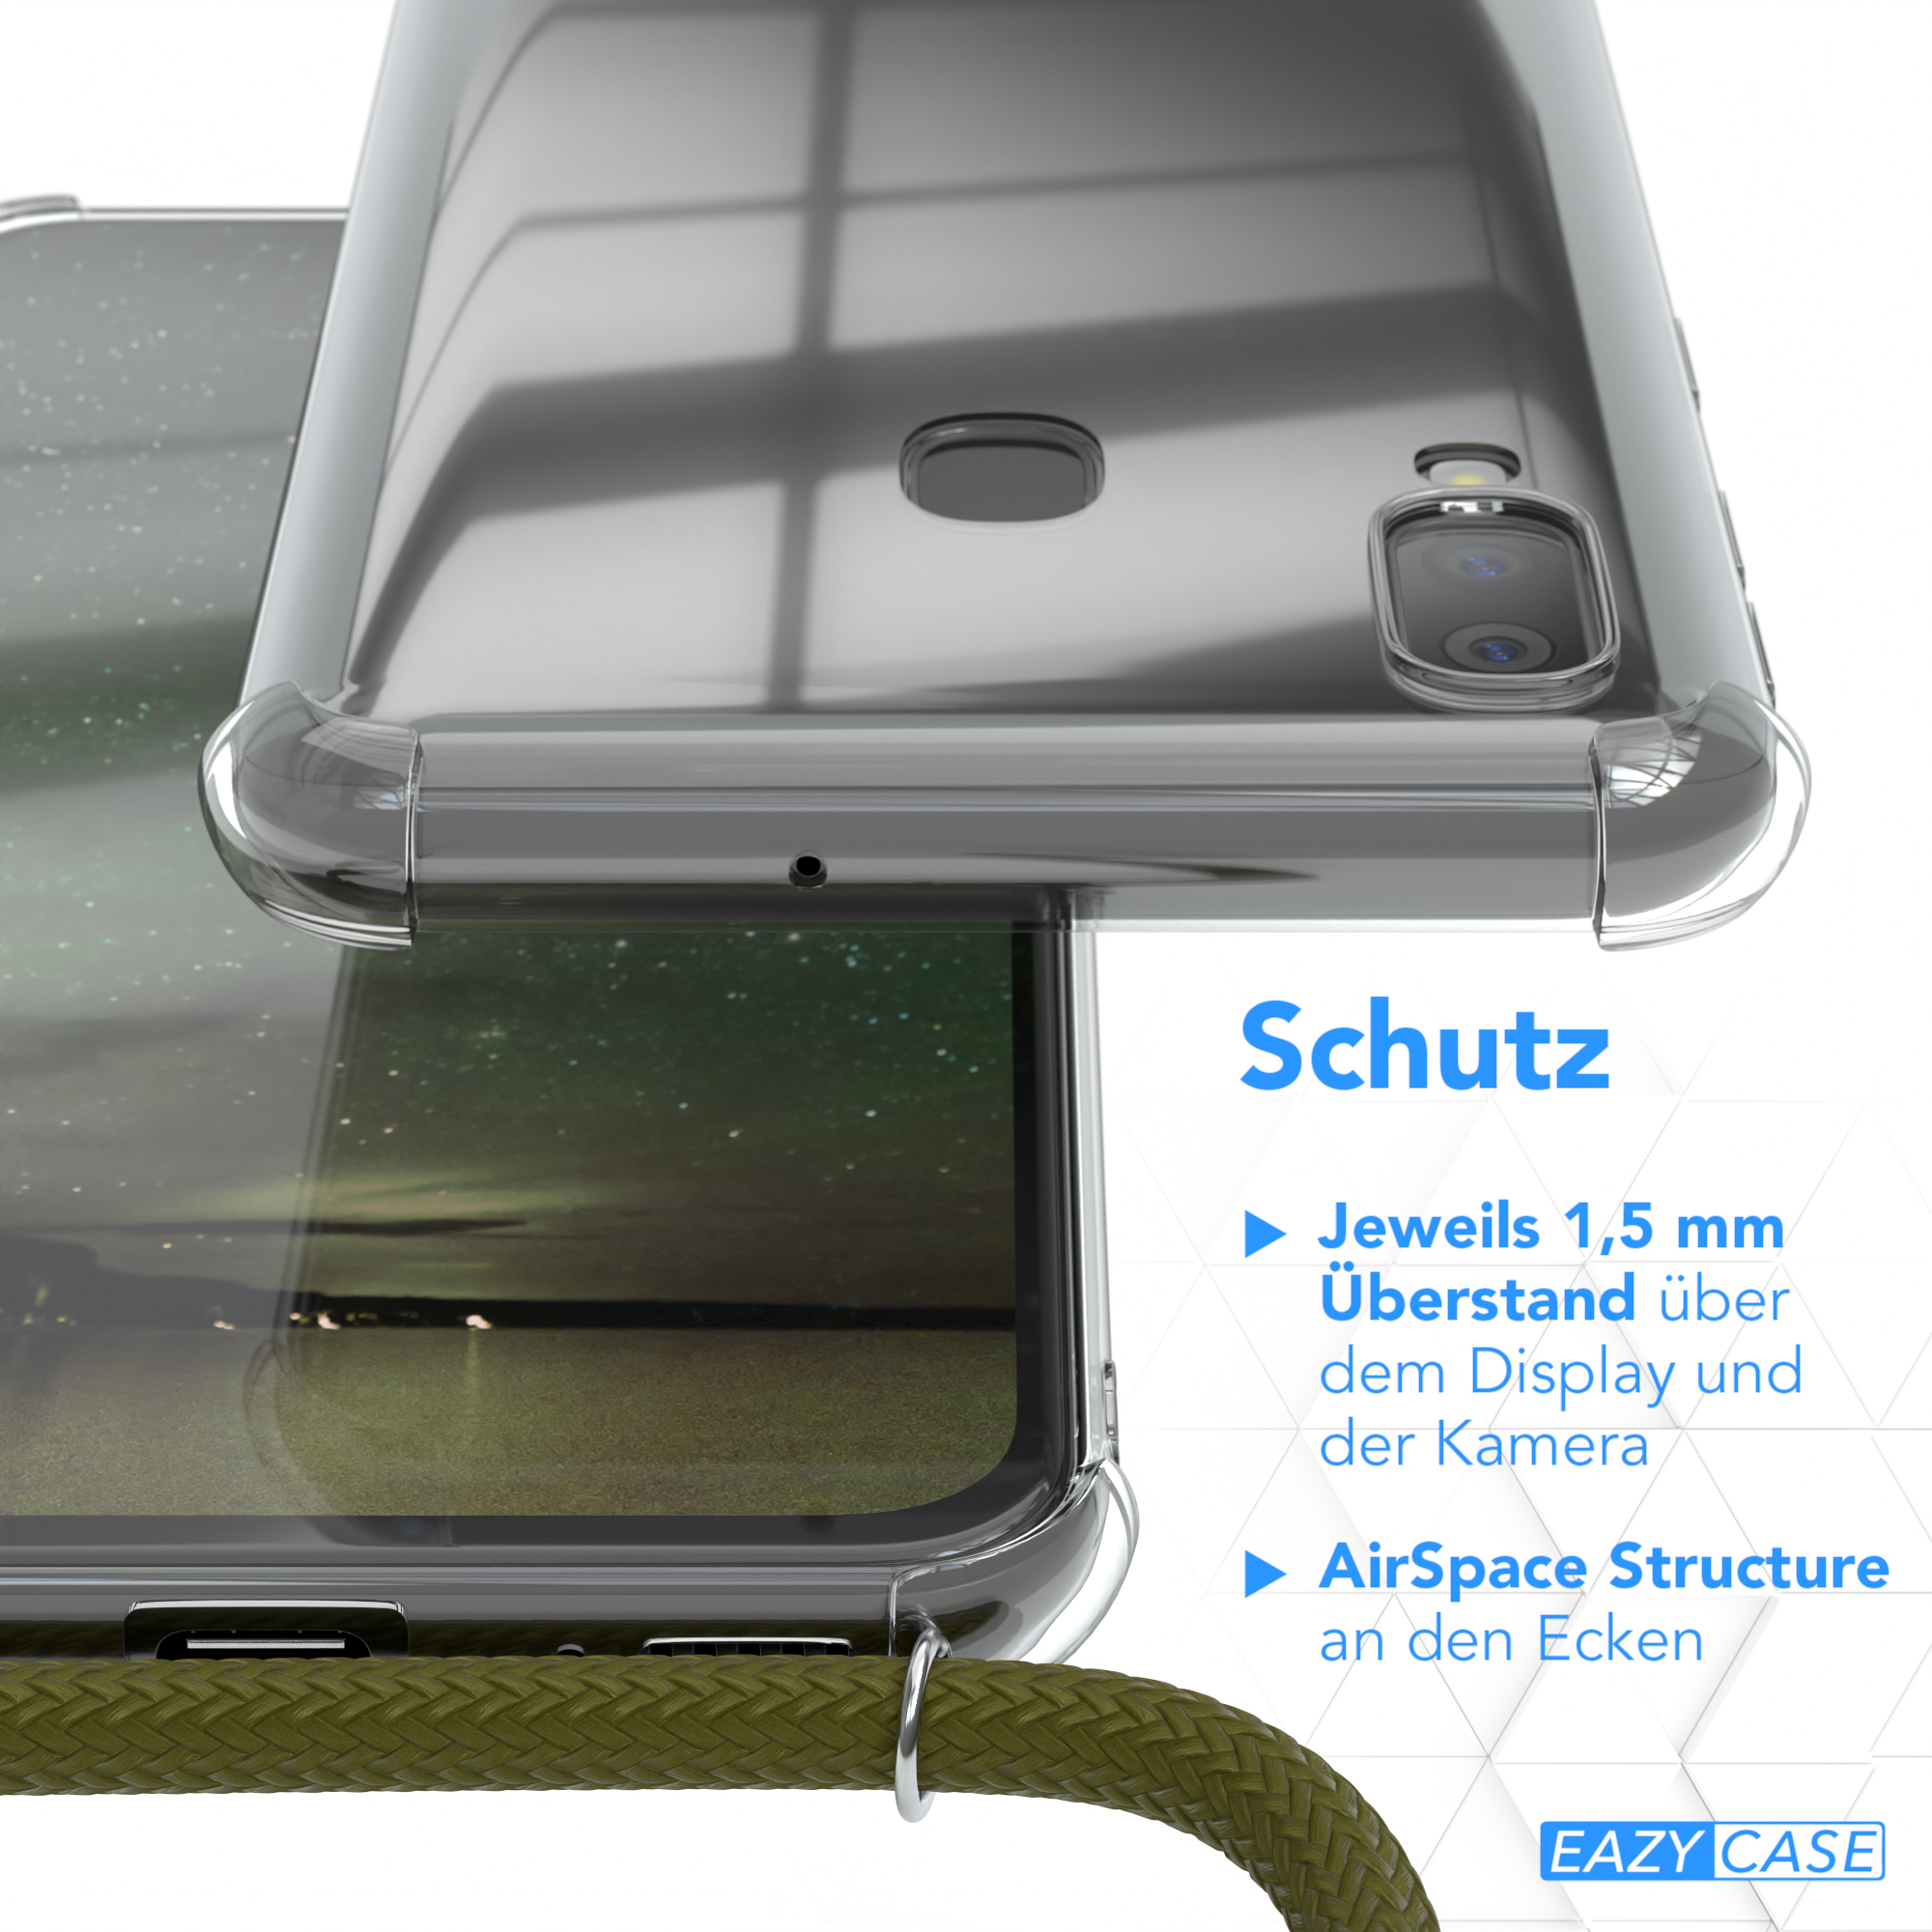 EAZY CASE Umhängeband, mit Umhängetasche, A40, Grün Clear Cover Samsung, Olive Galaxy